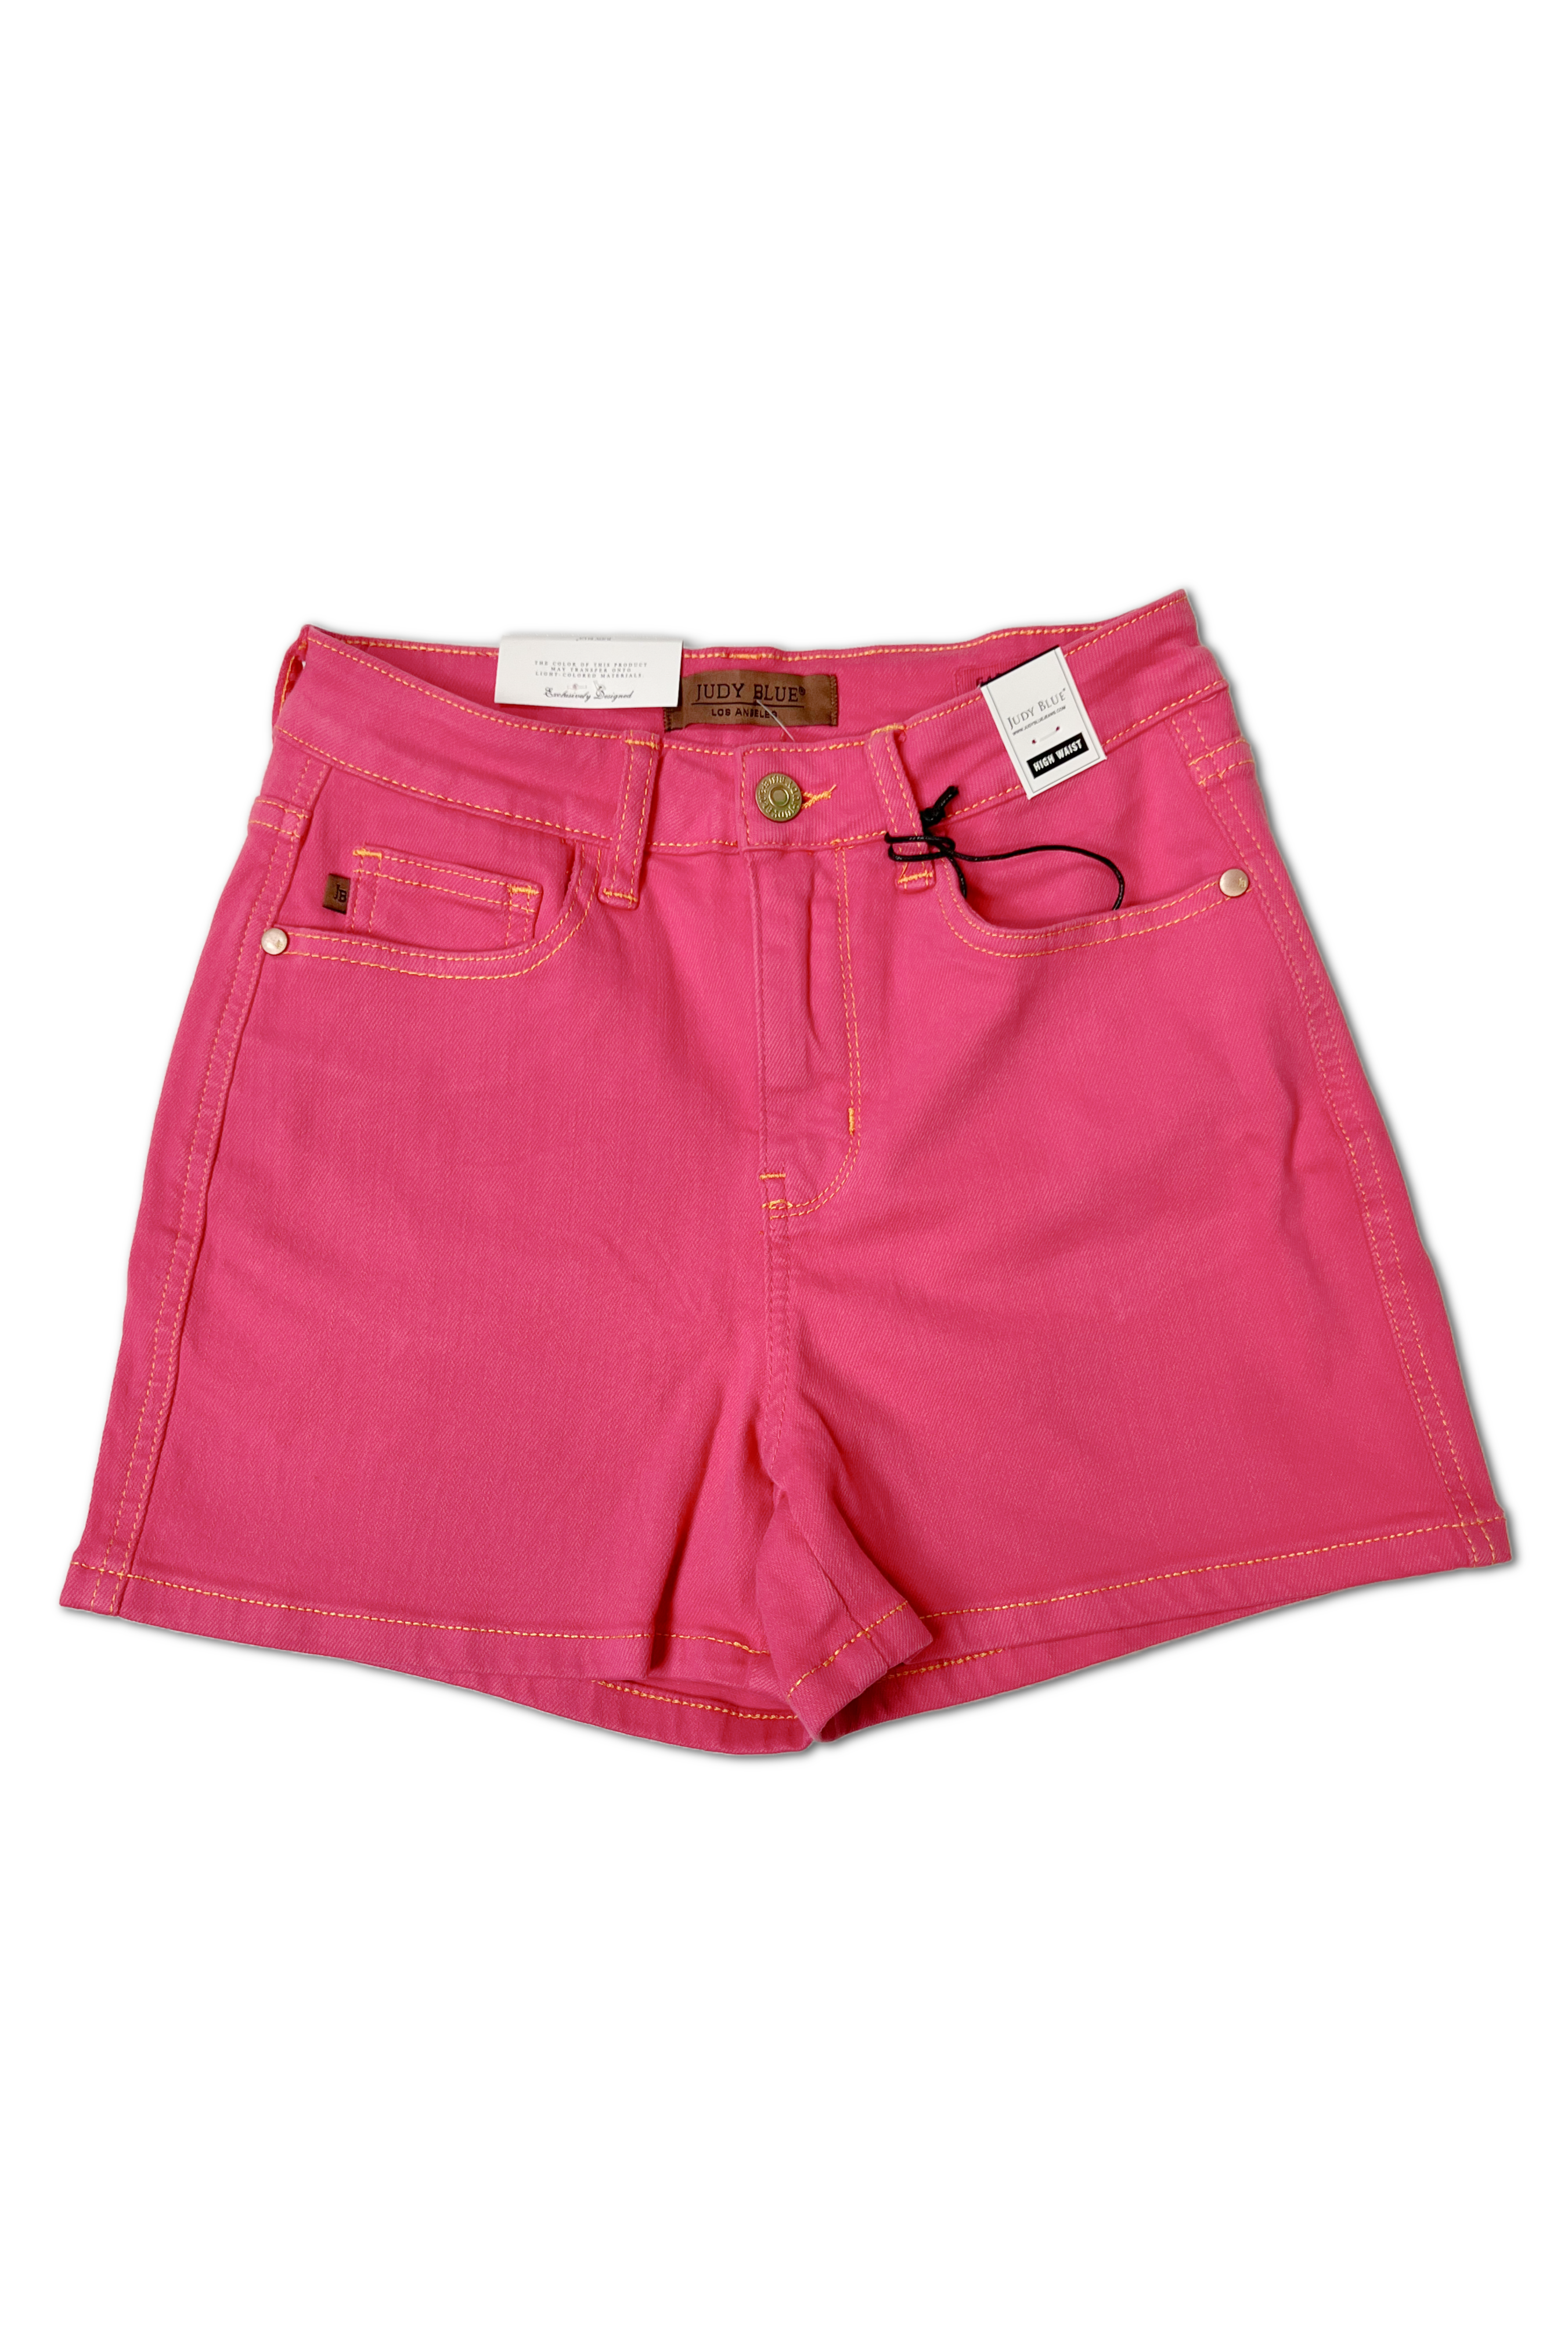 Berry Sweet Judy Blue Shorts-JB Boutique Simplified-Urban Threadz Boutique, Women's Fashion Boutique in Saugatuck, MI